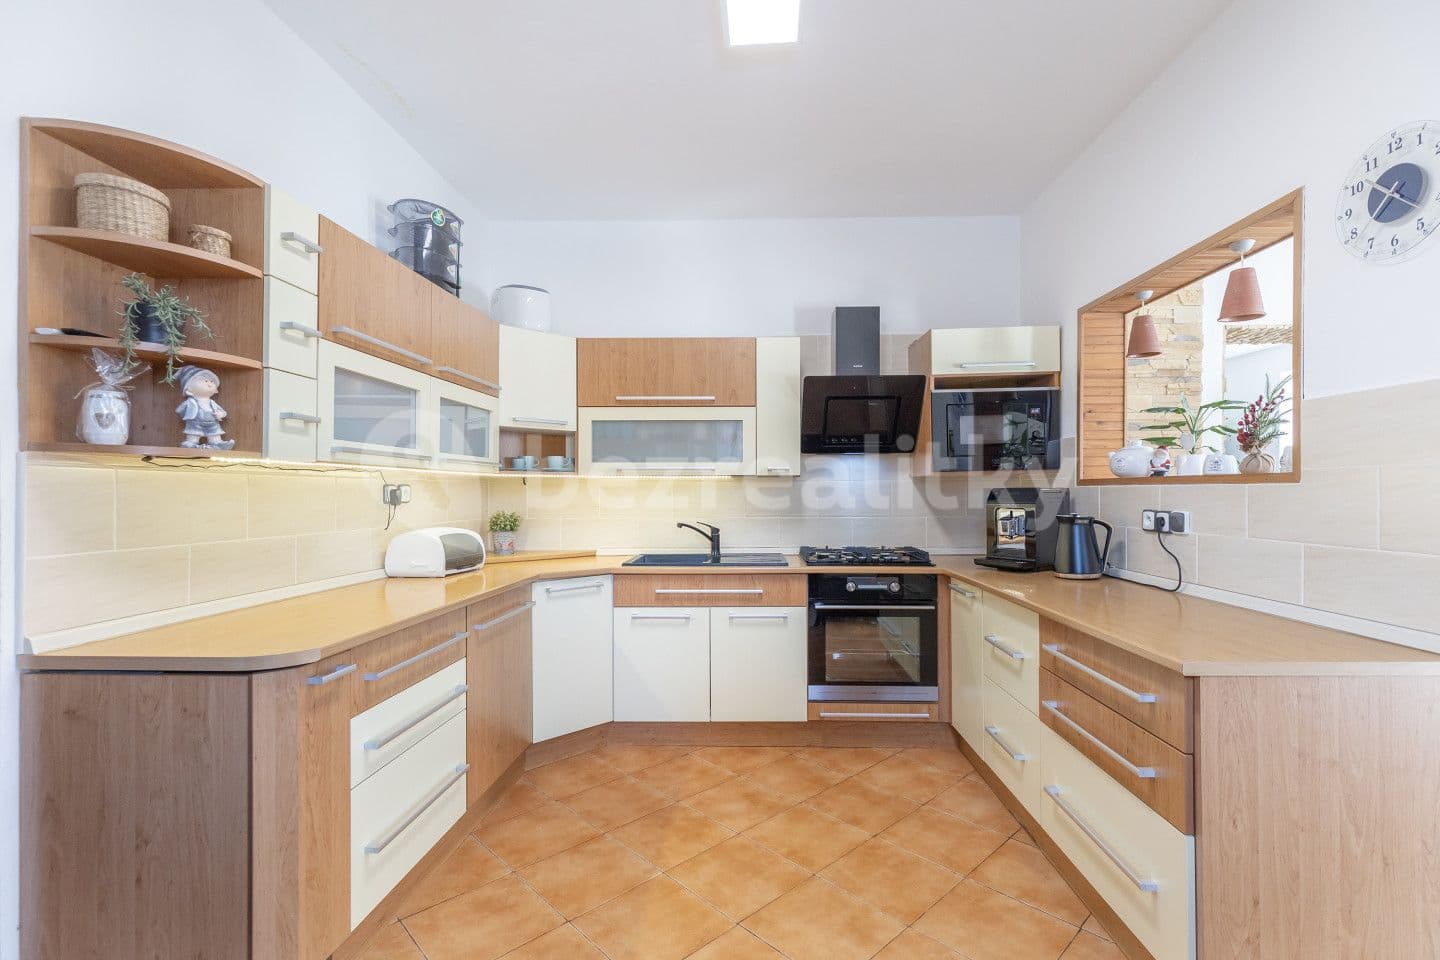 4 bedroom with open-plan kitchen flat for sale, 139 m², Mankovice, Moravskoslezský Region